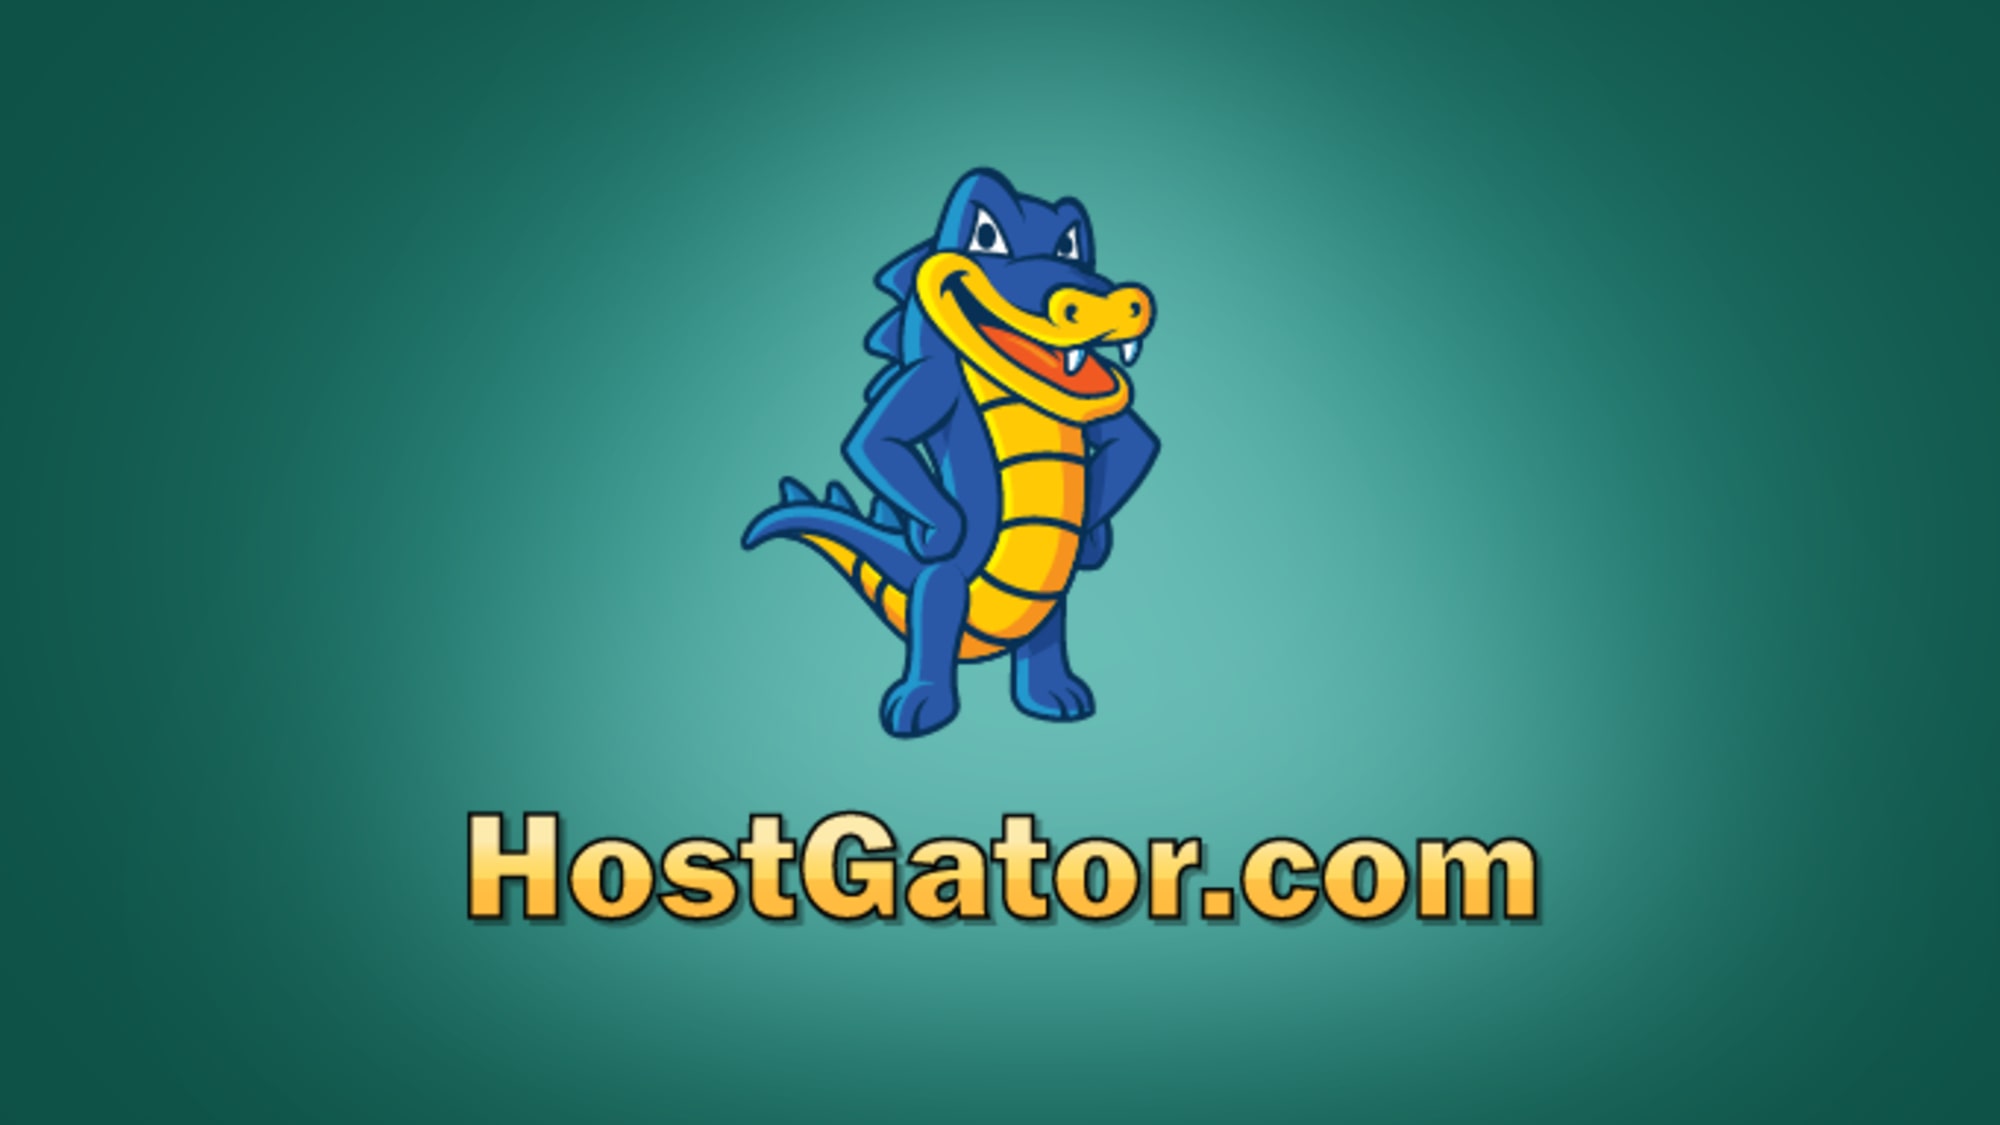 HostGator logo on green background